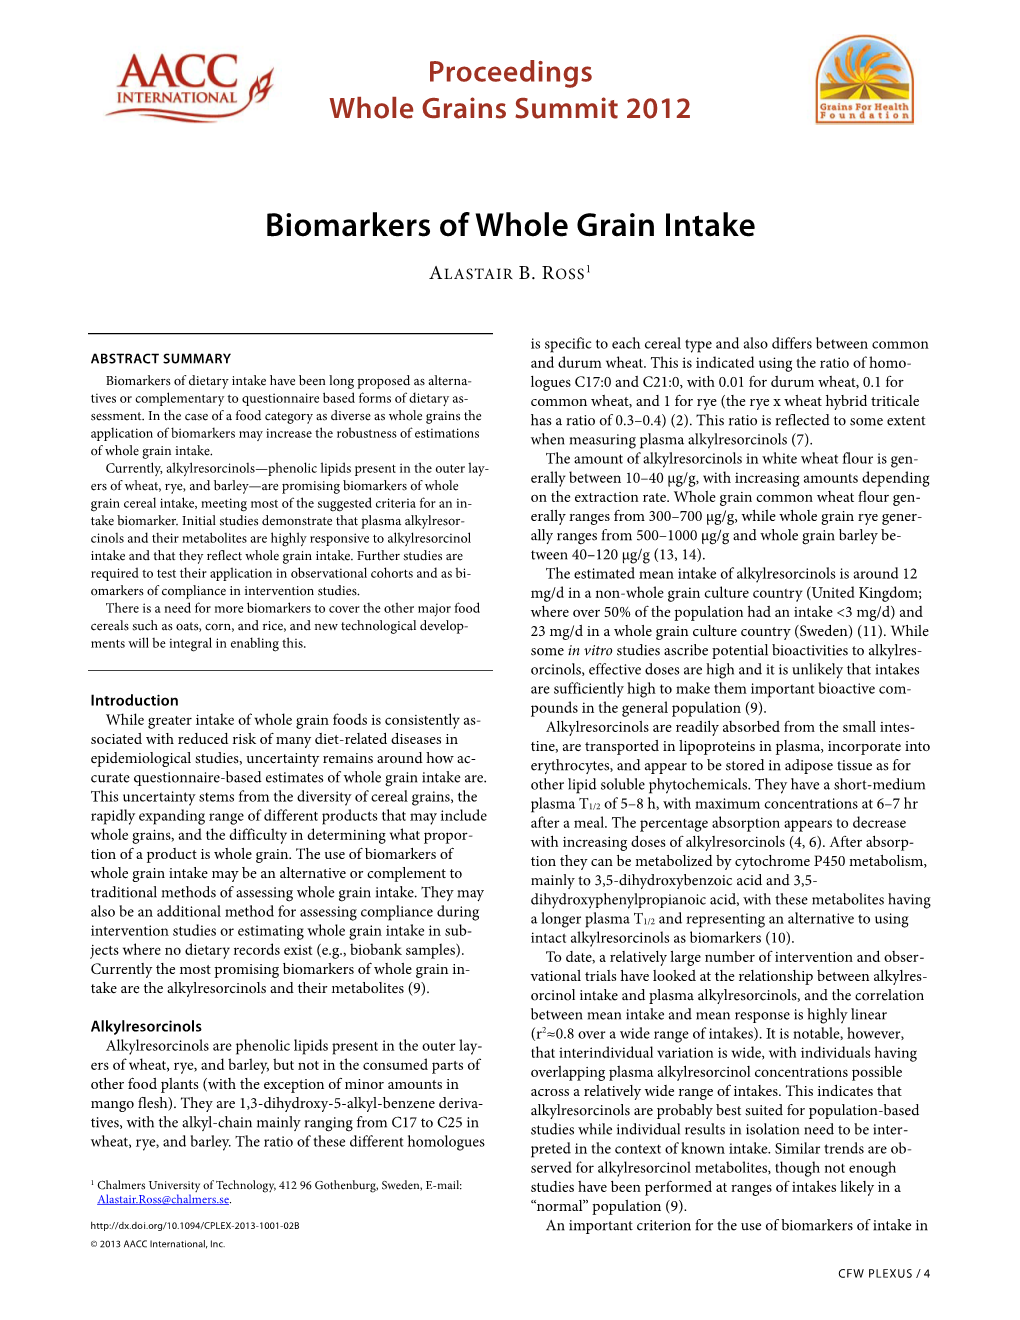 Biomarkers of Whole Grain Intake